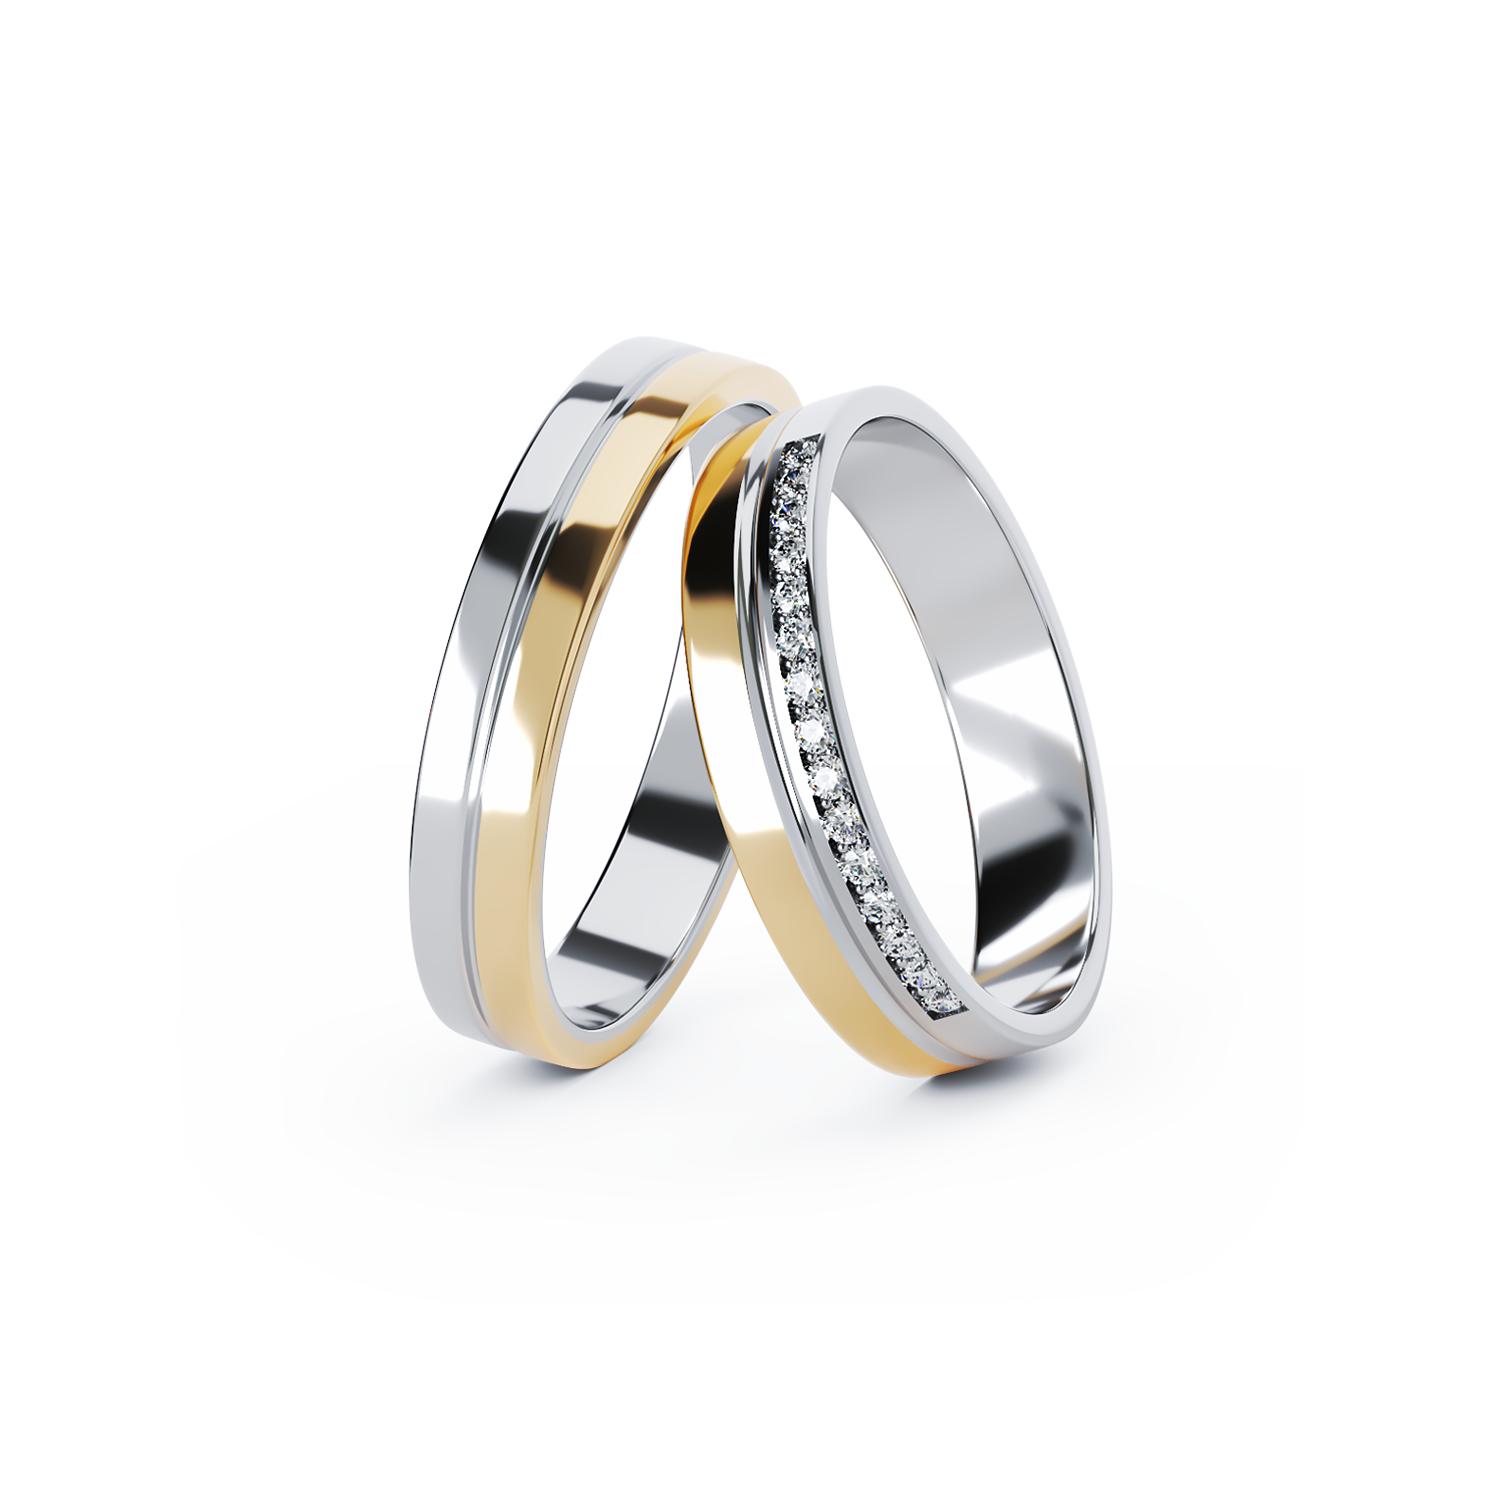 TEI-C383 gold wedding rings